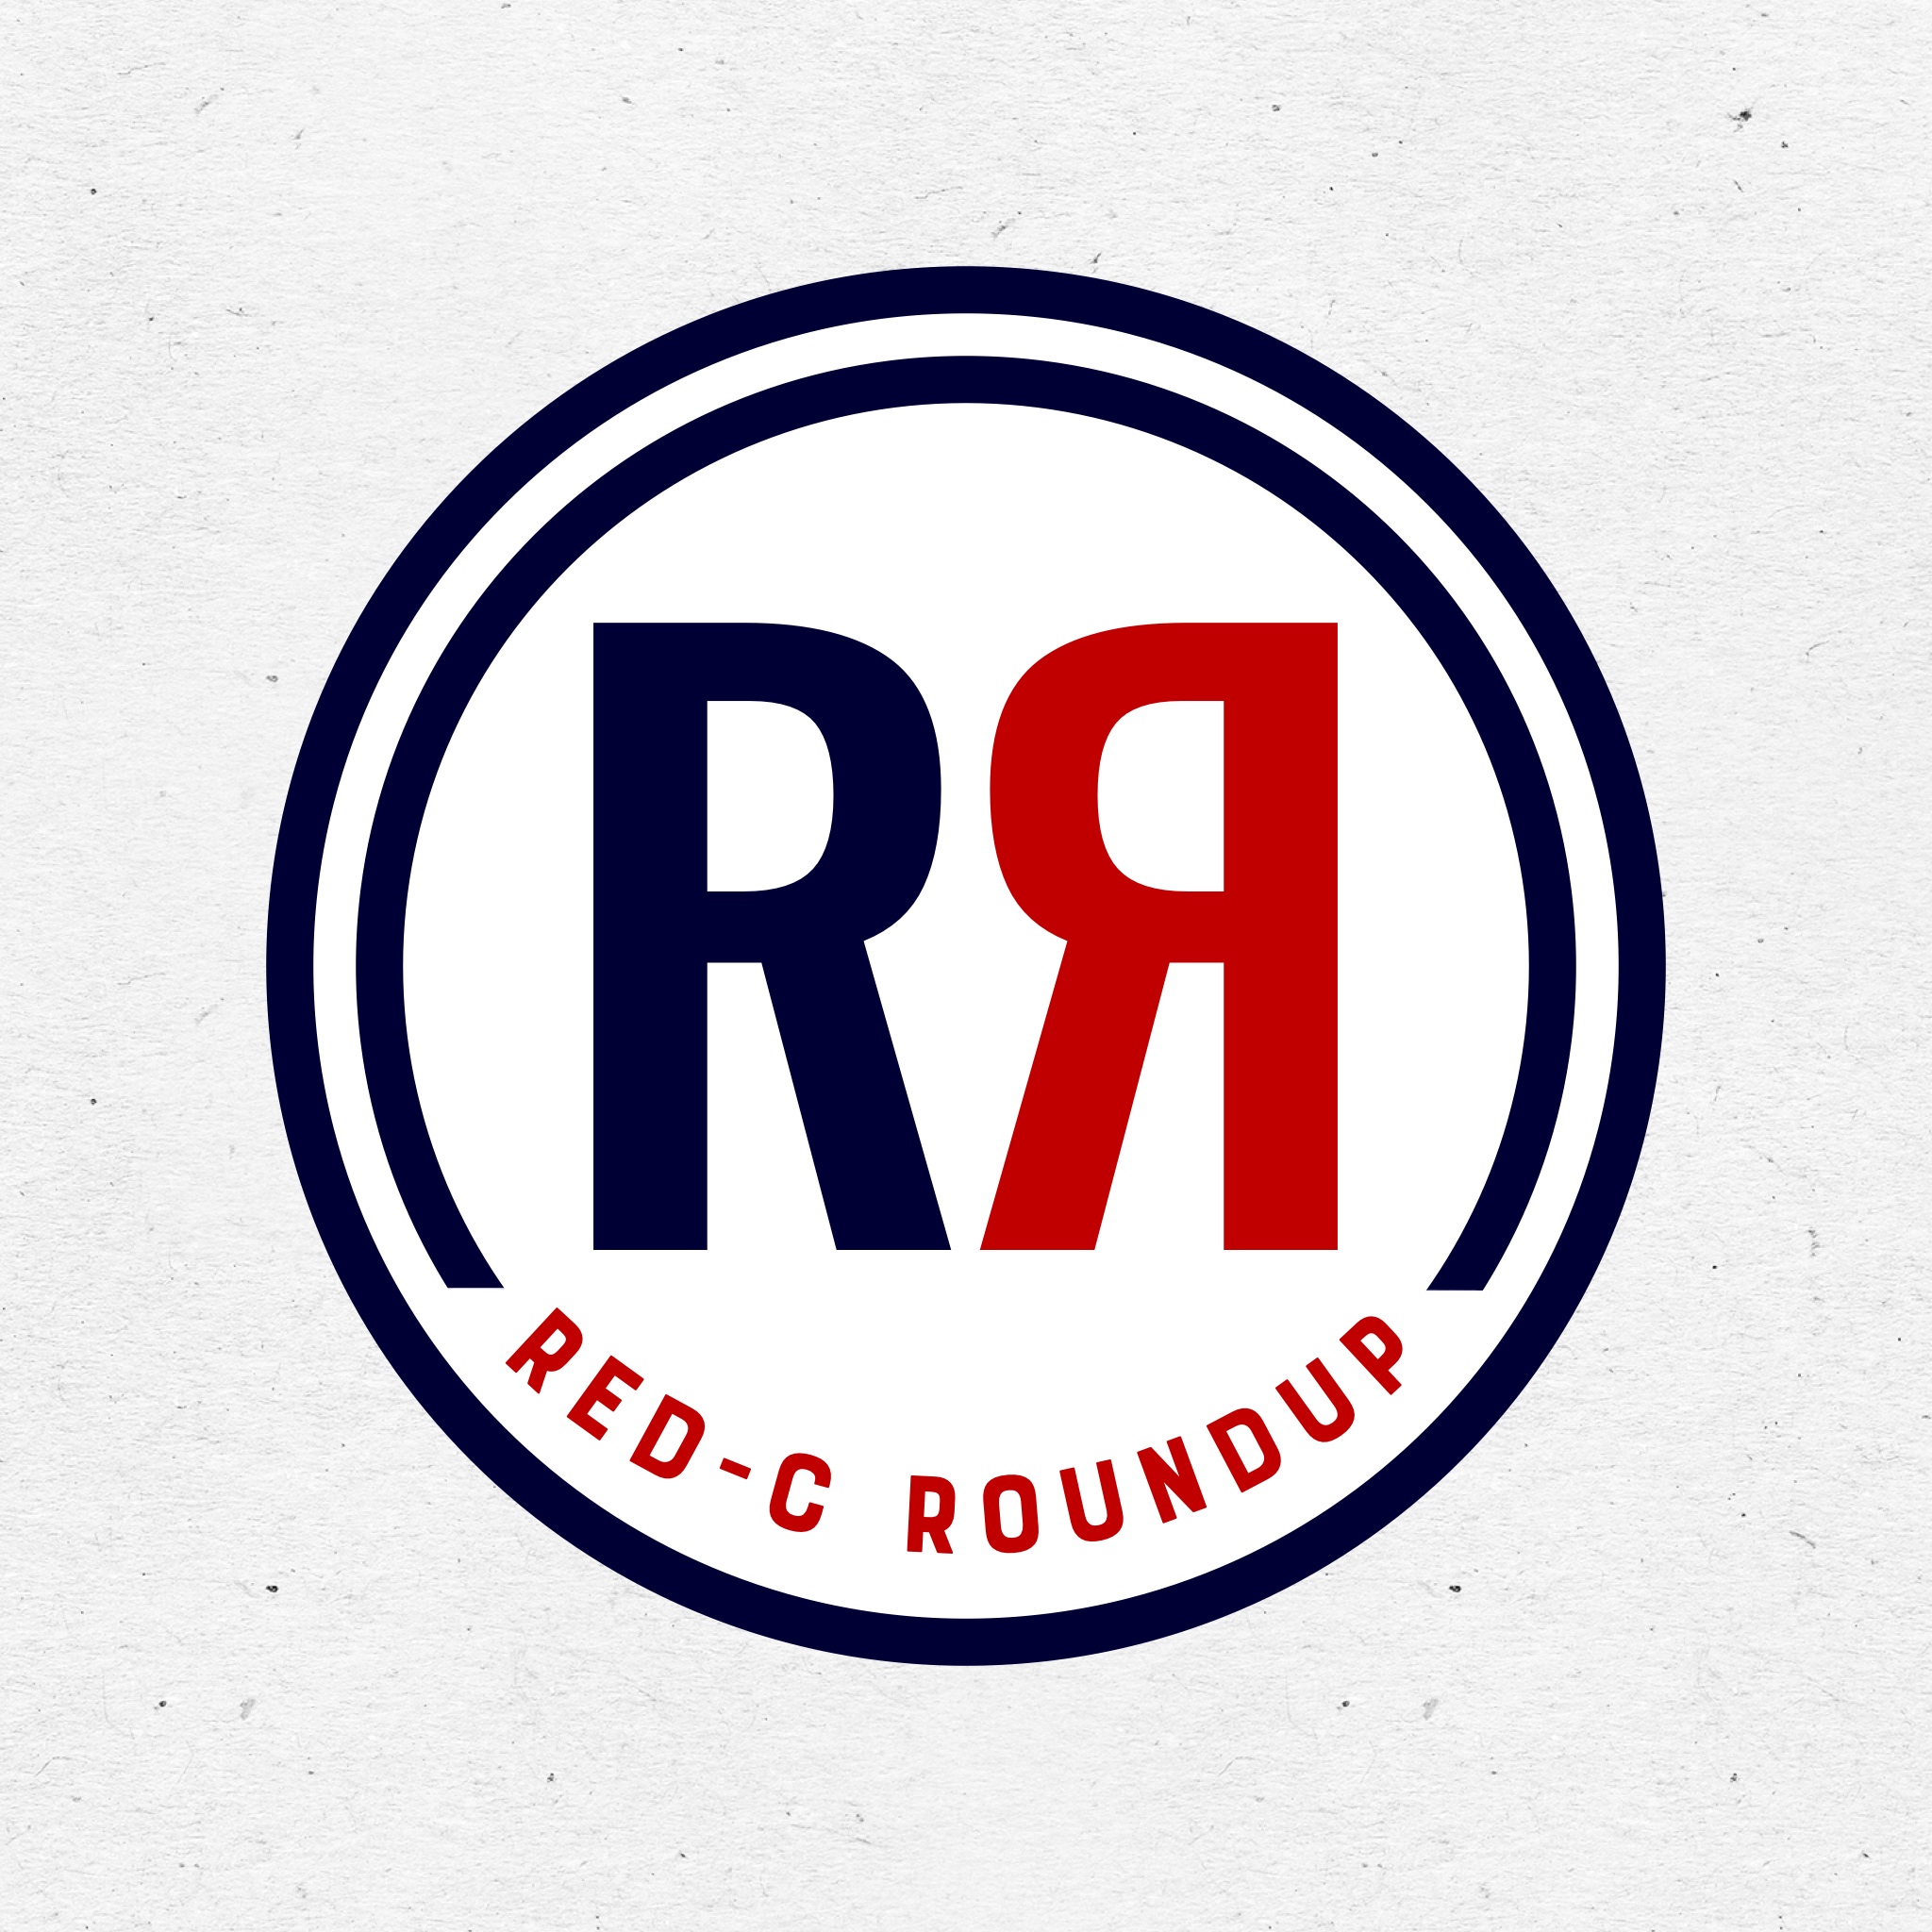 RED-C Roundup